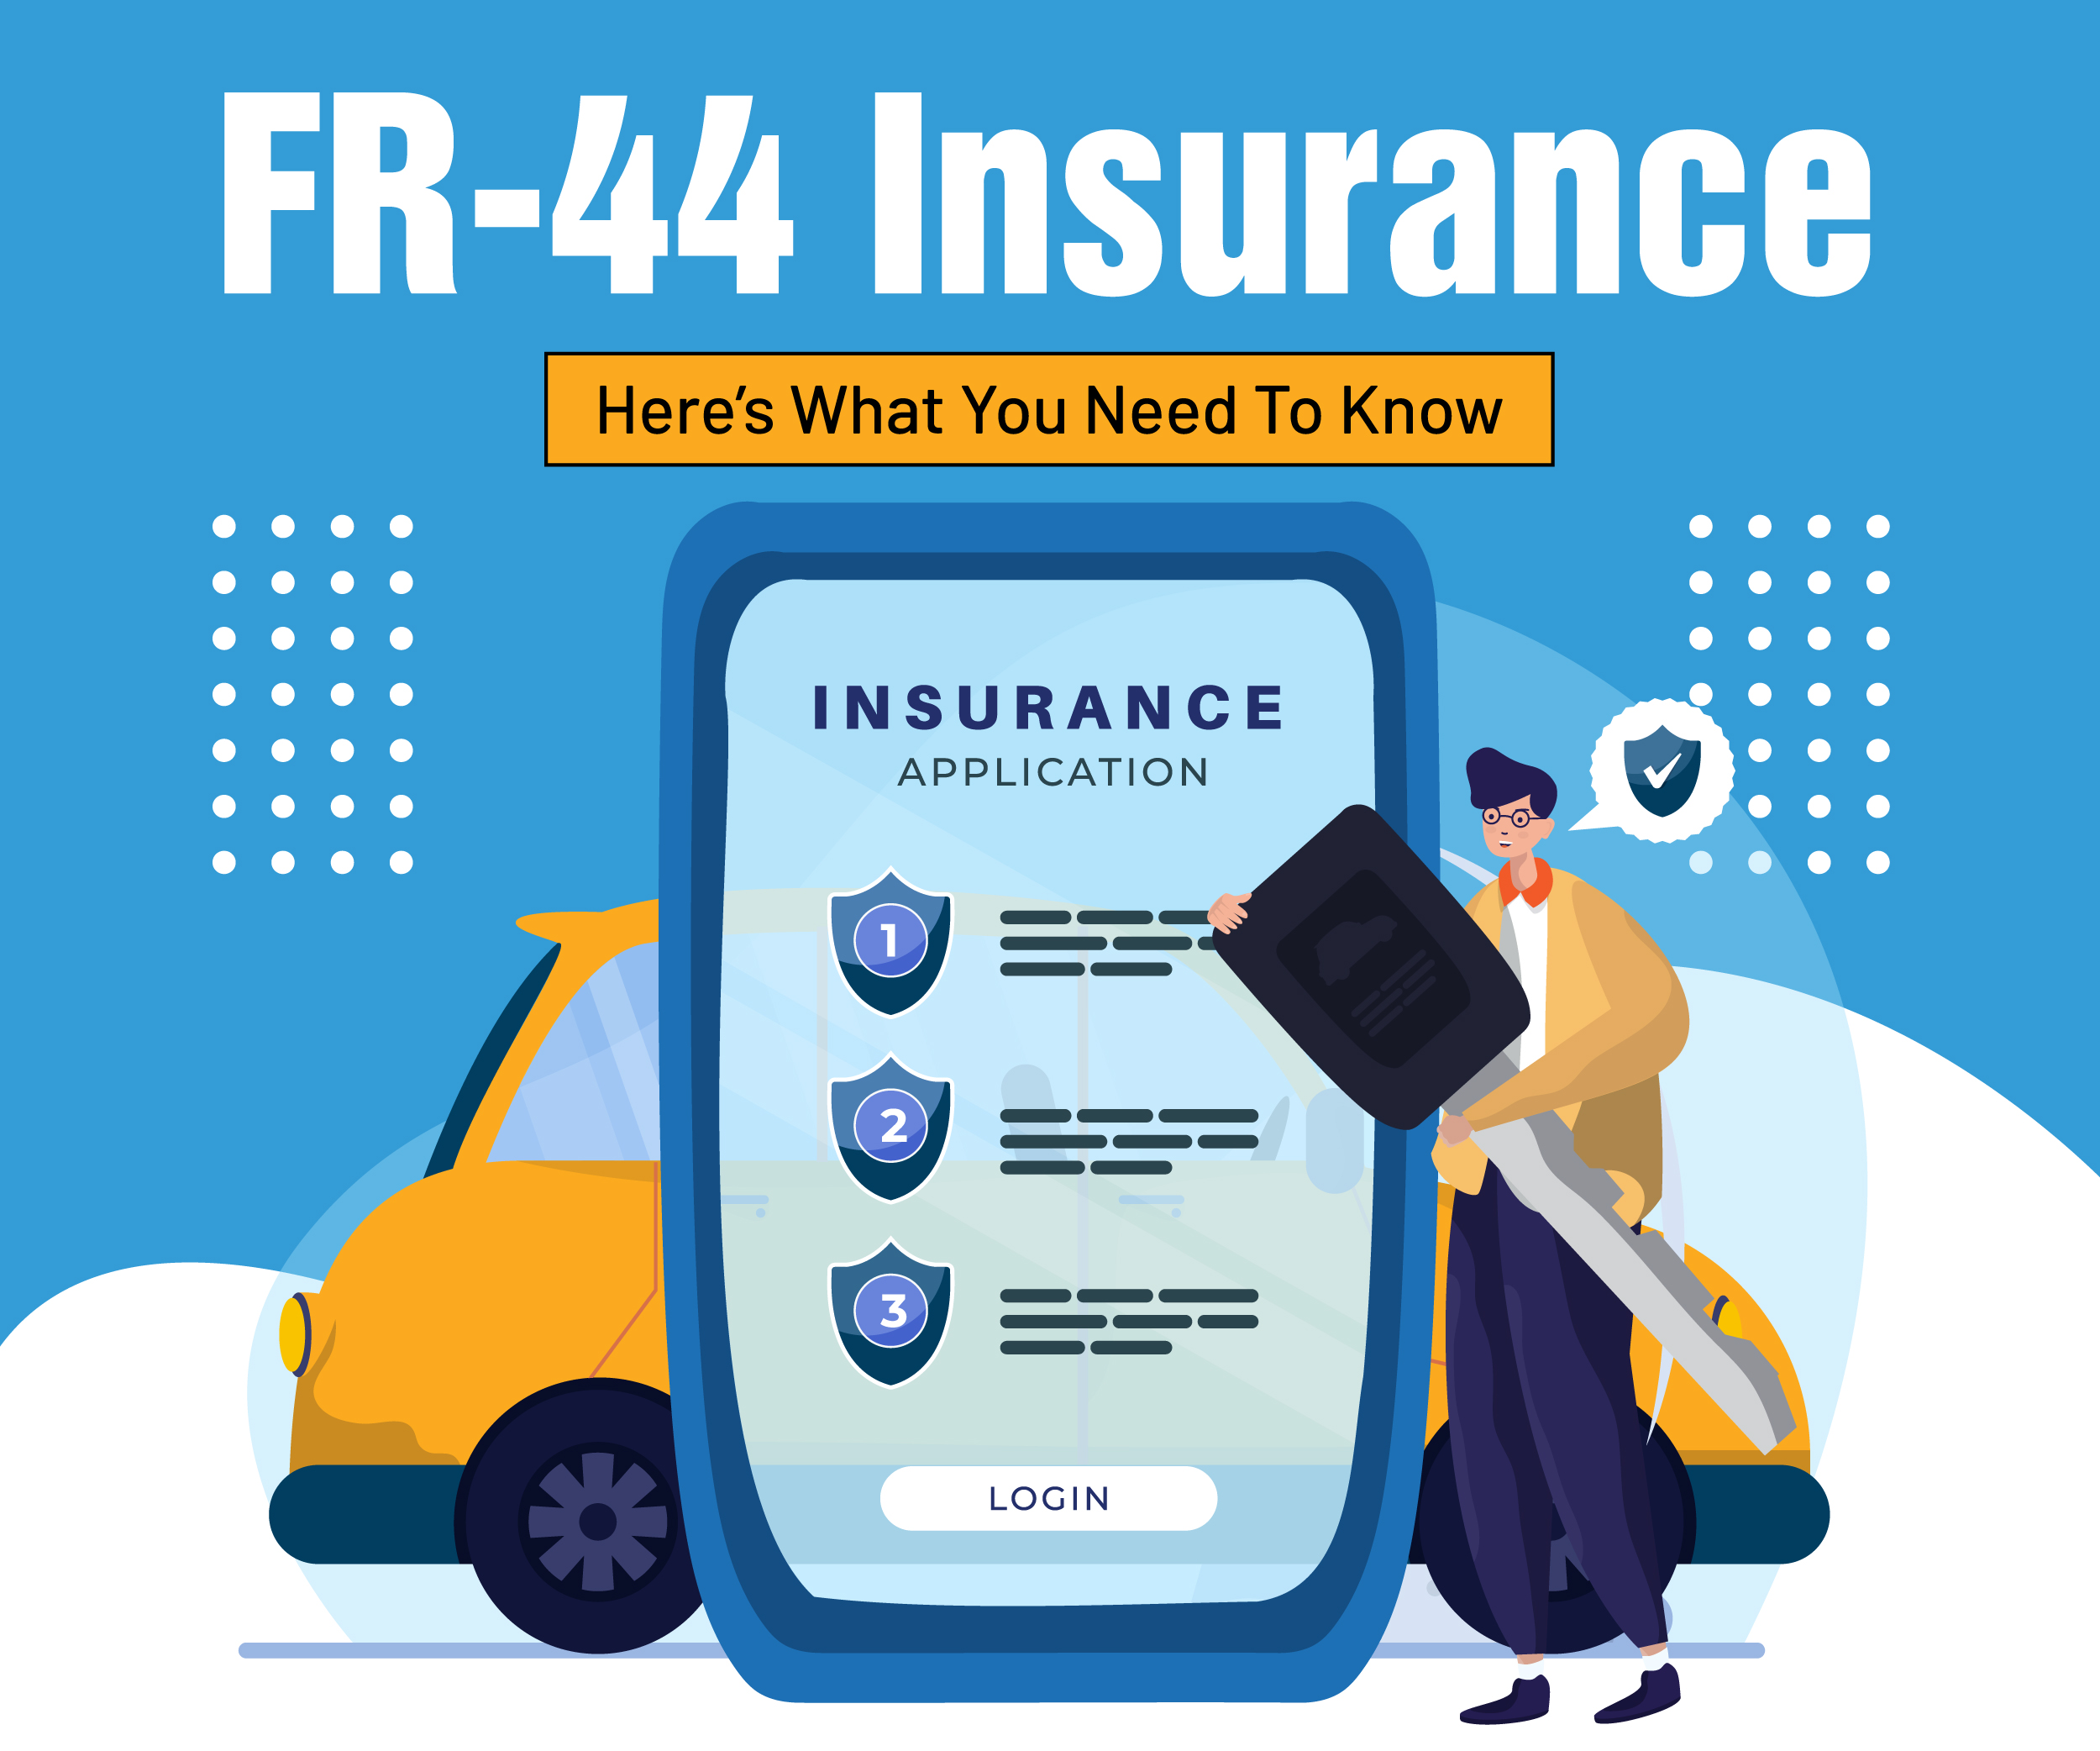 An infographic describing FR-44 insurance.